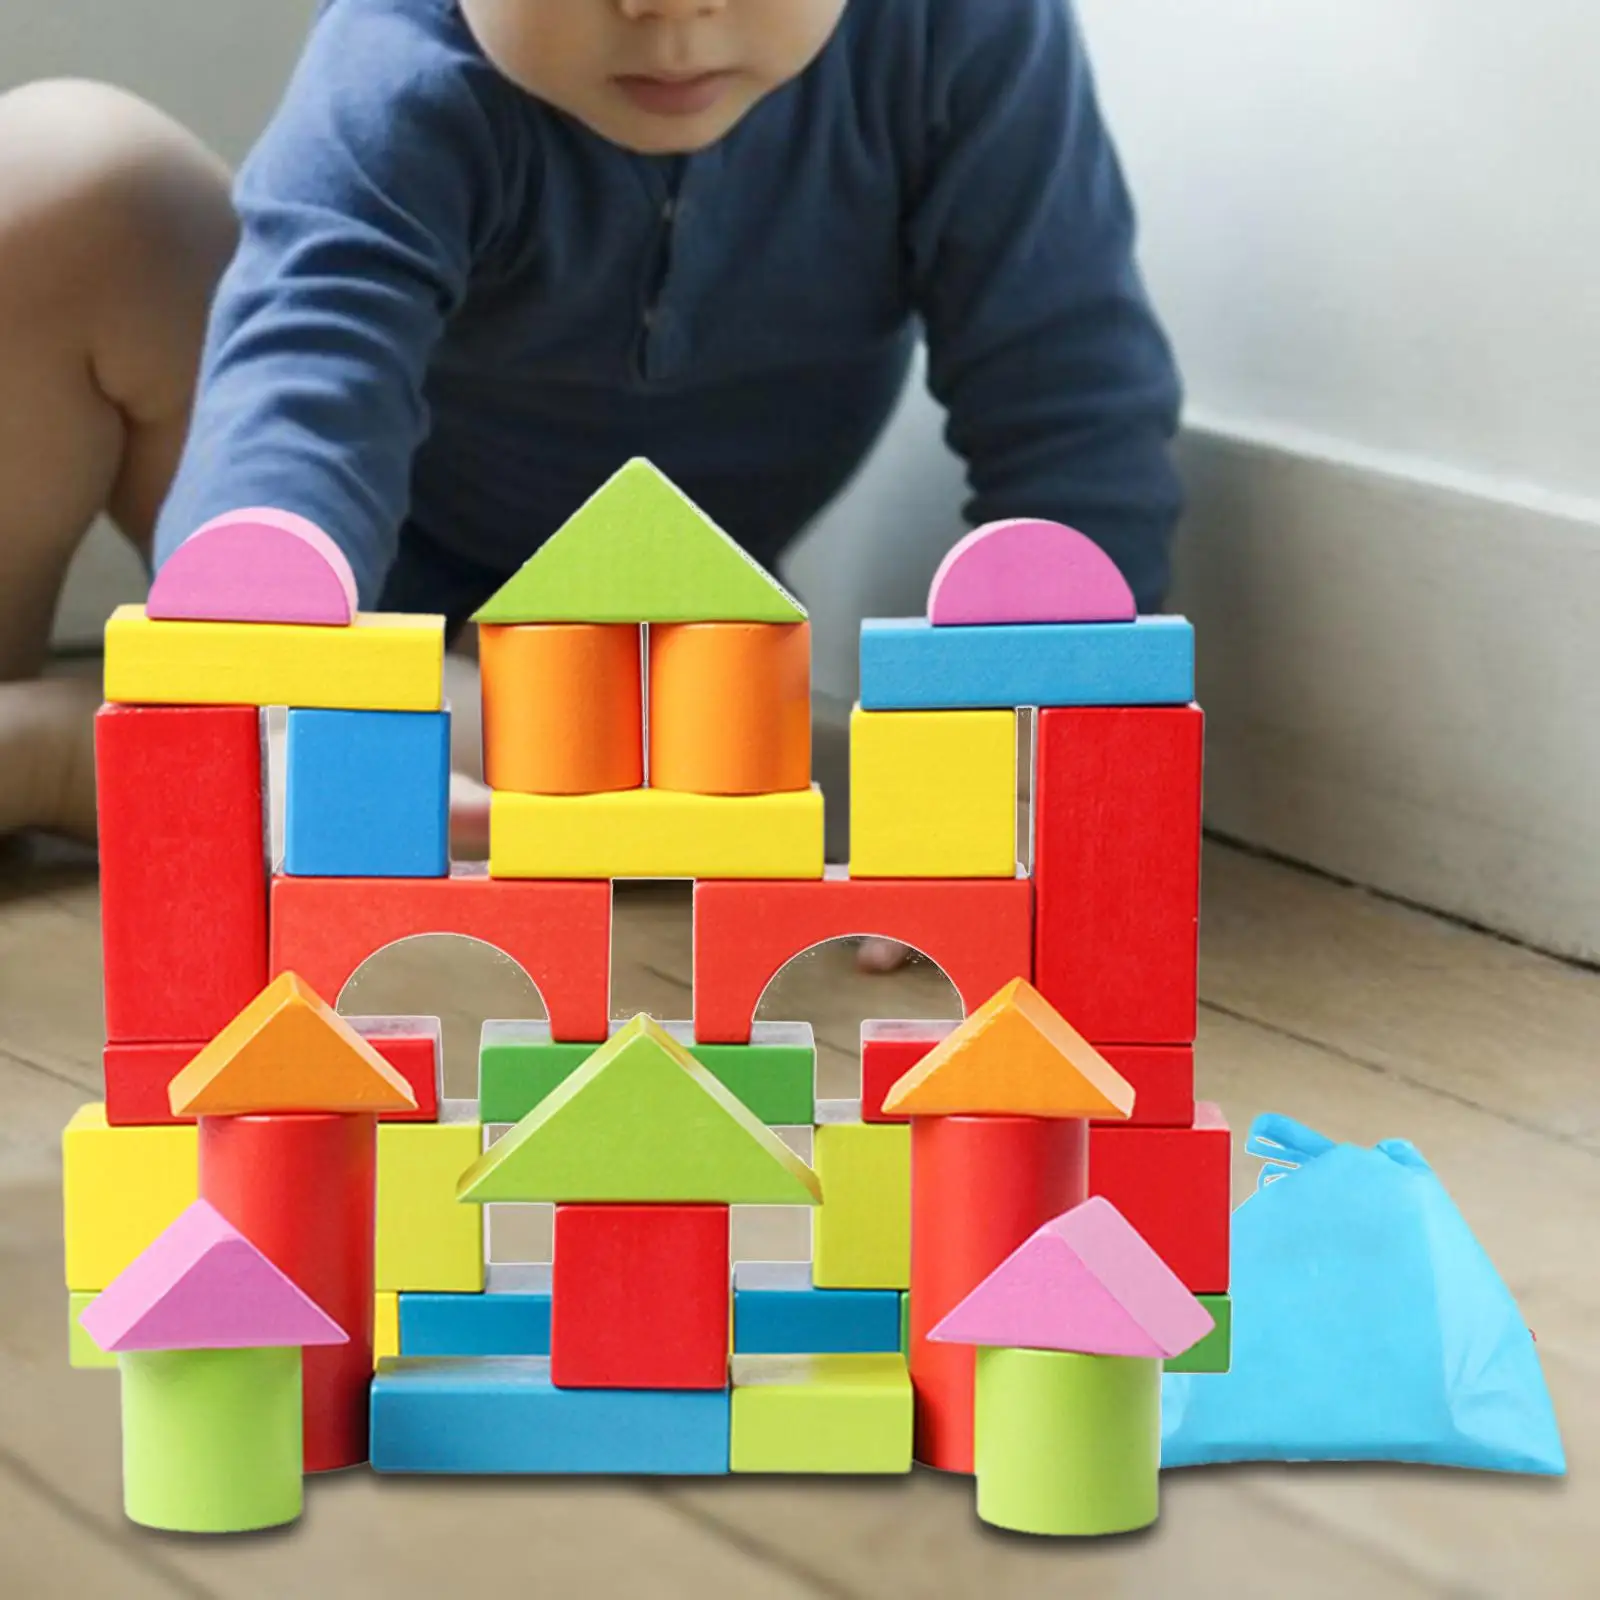 40 Pieces Building Blocks Preschool Learning DIY for Kids Children Gifts